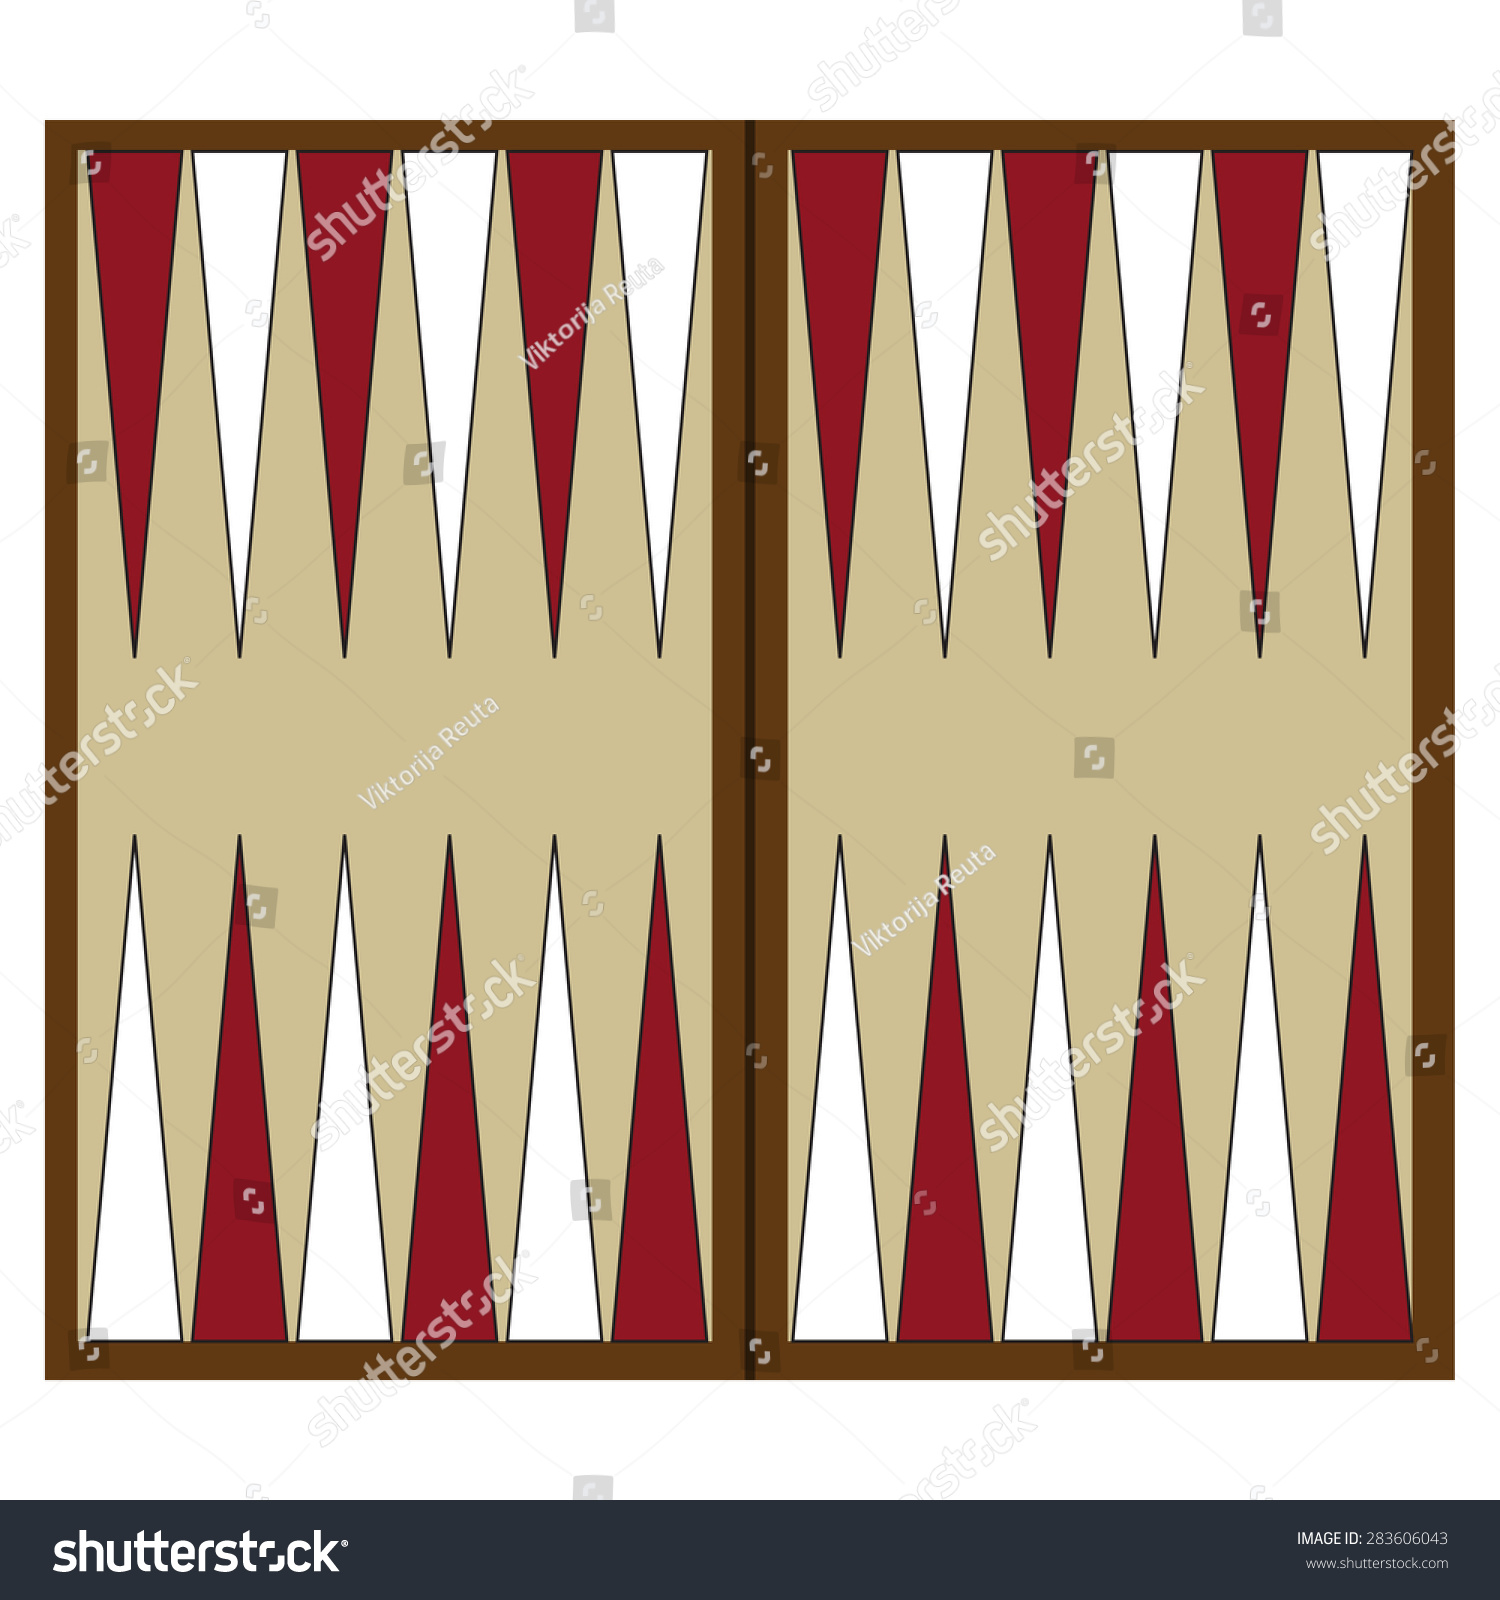 SVG of Wooden backgammon board game vector illustration. Backgammon table svg